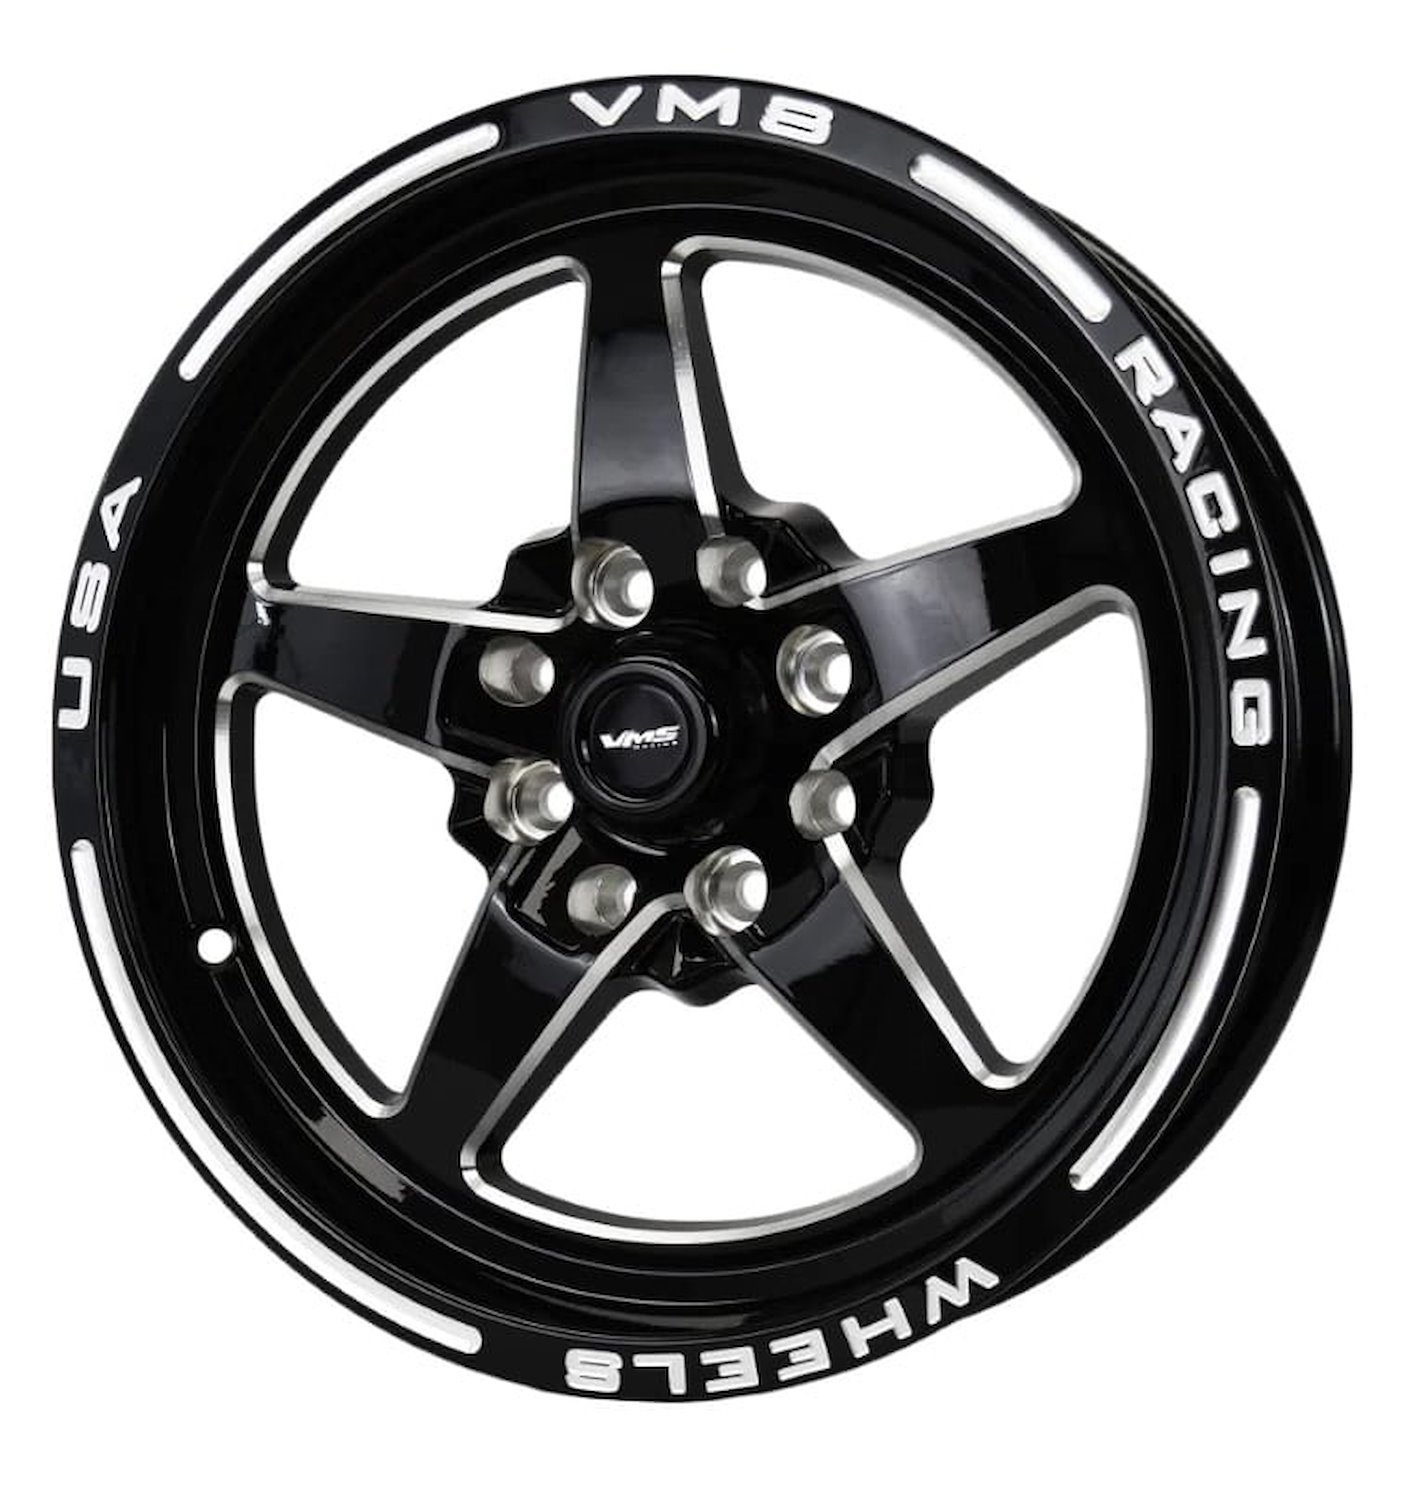 VWST054 V-Star Wheel, Size: 15